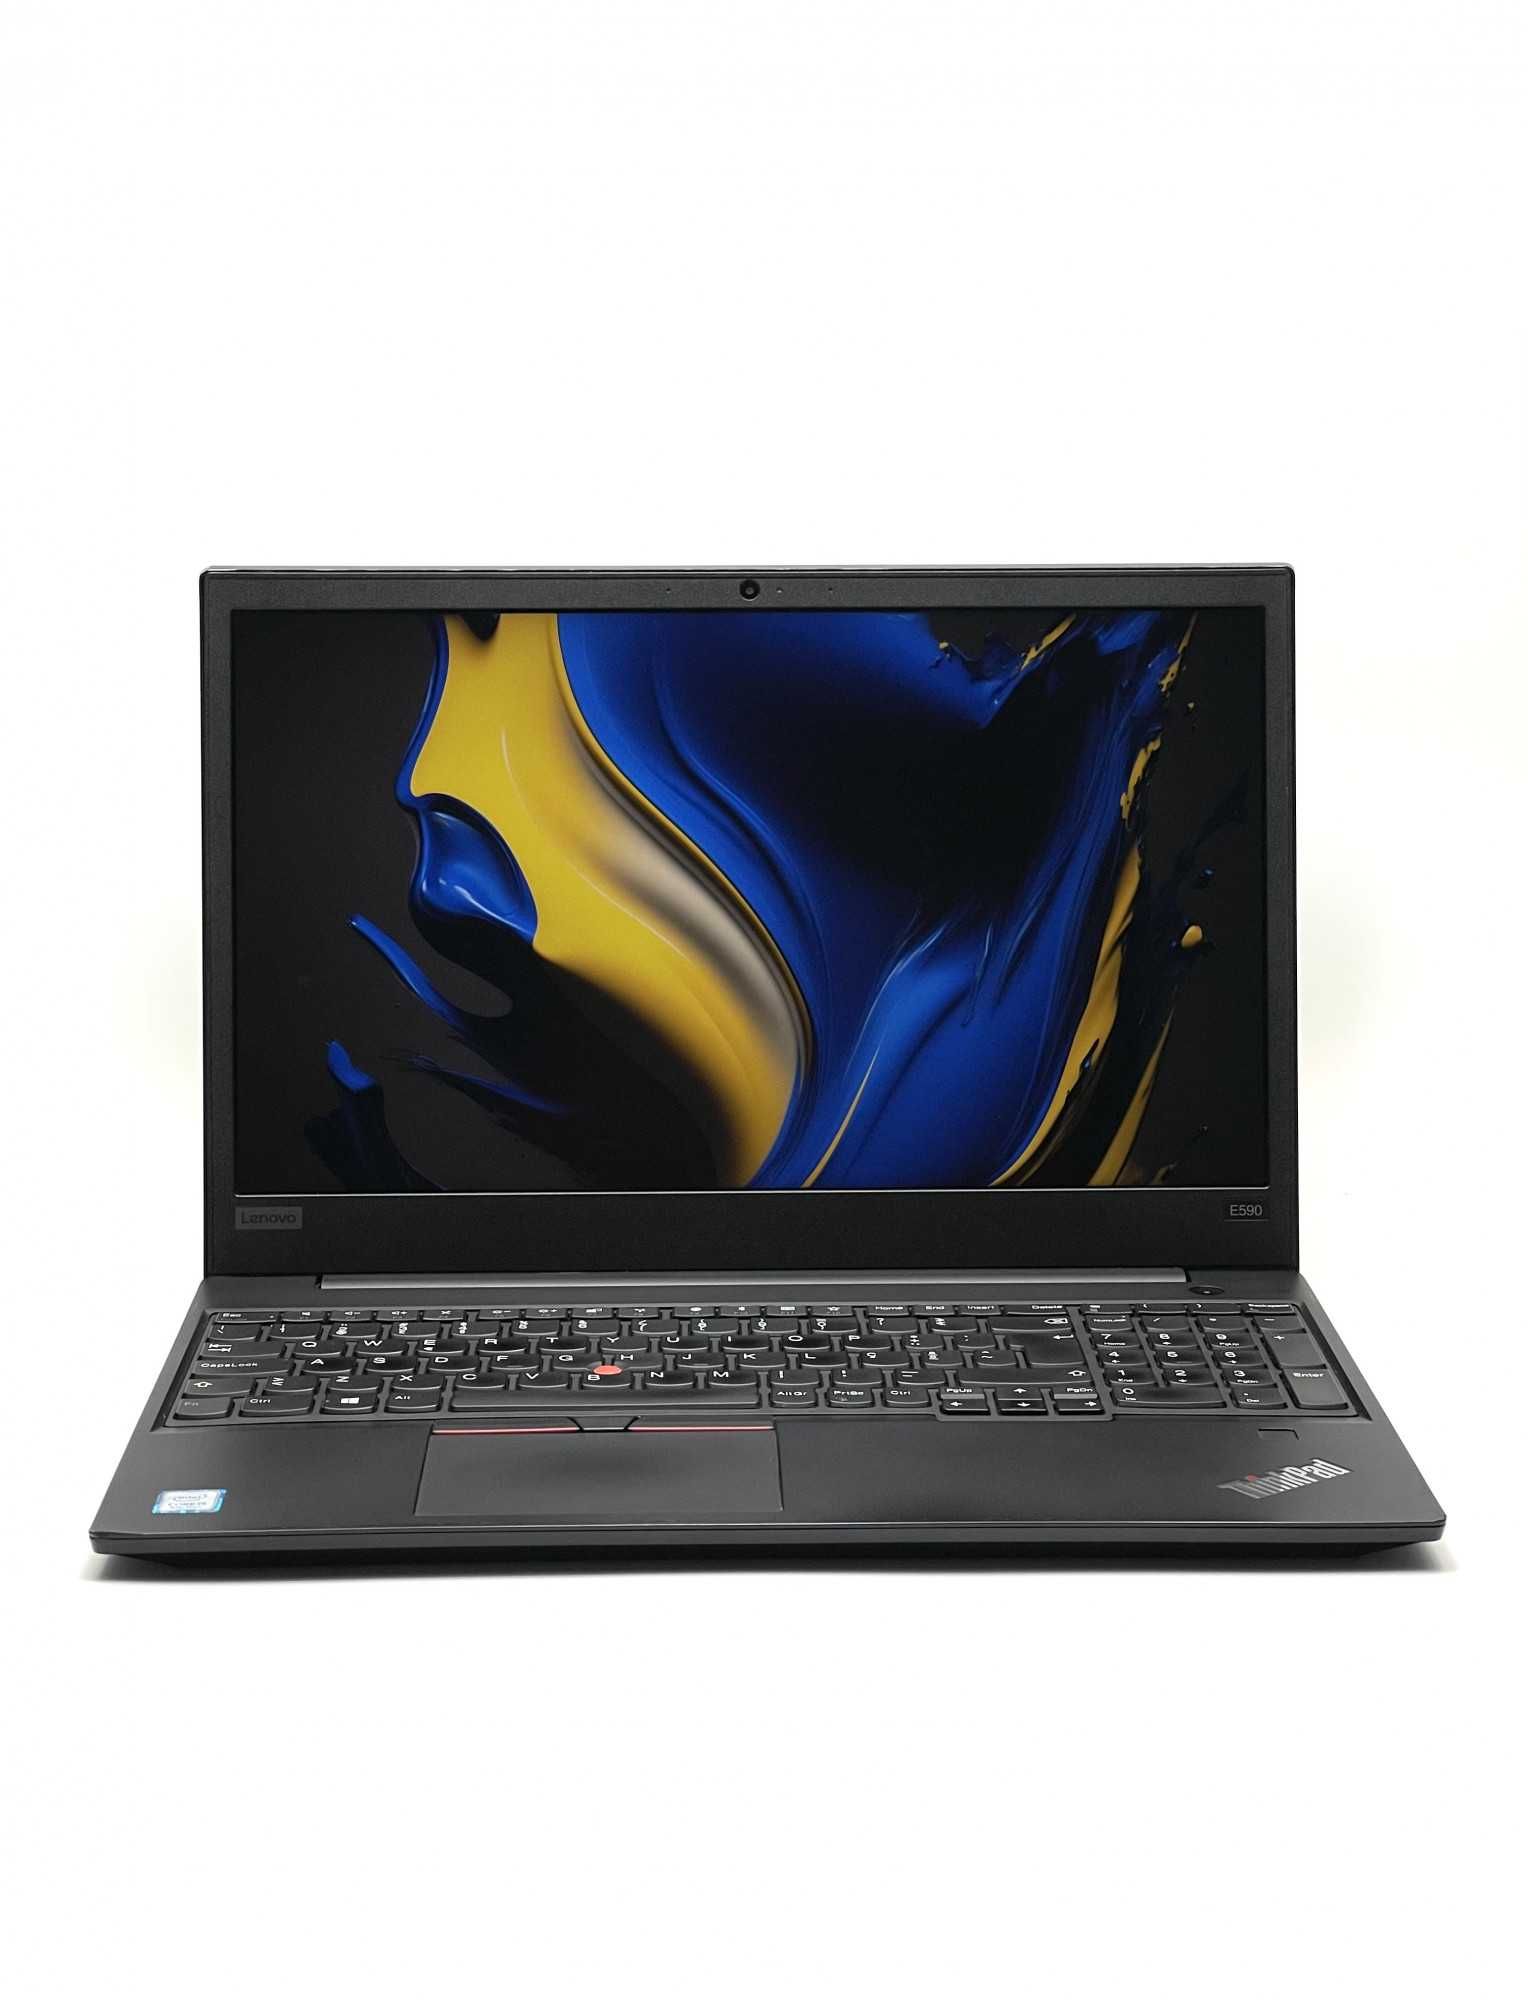 Lenovo ThinkPad E590 | 15.6" IPS FHD | i5-8265U 3.9 Ghz | SSD 256 Gb